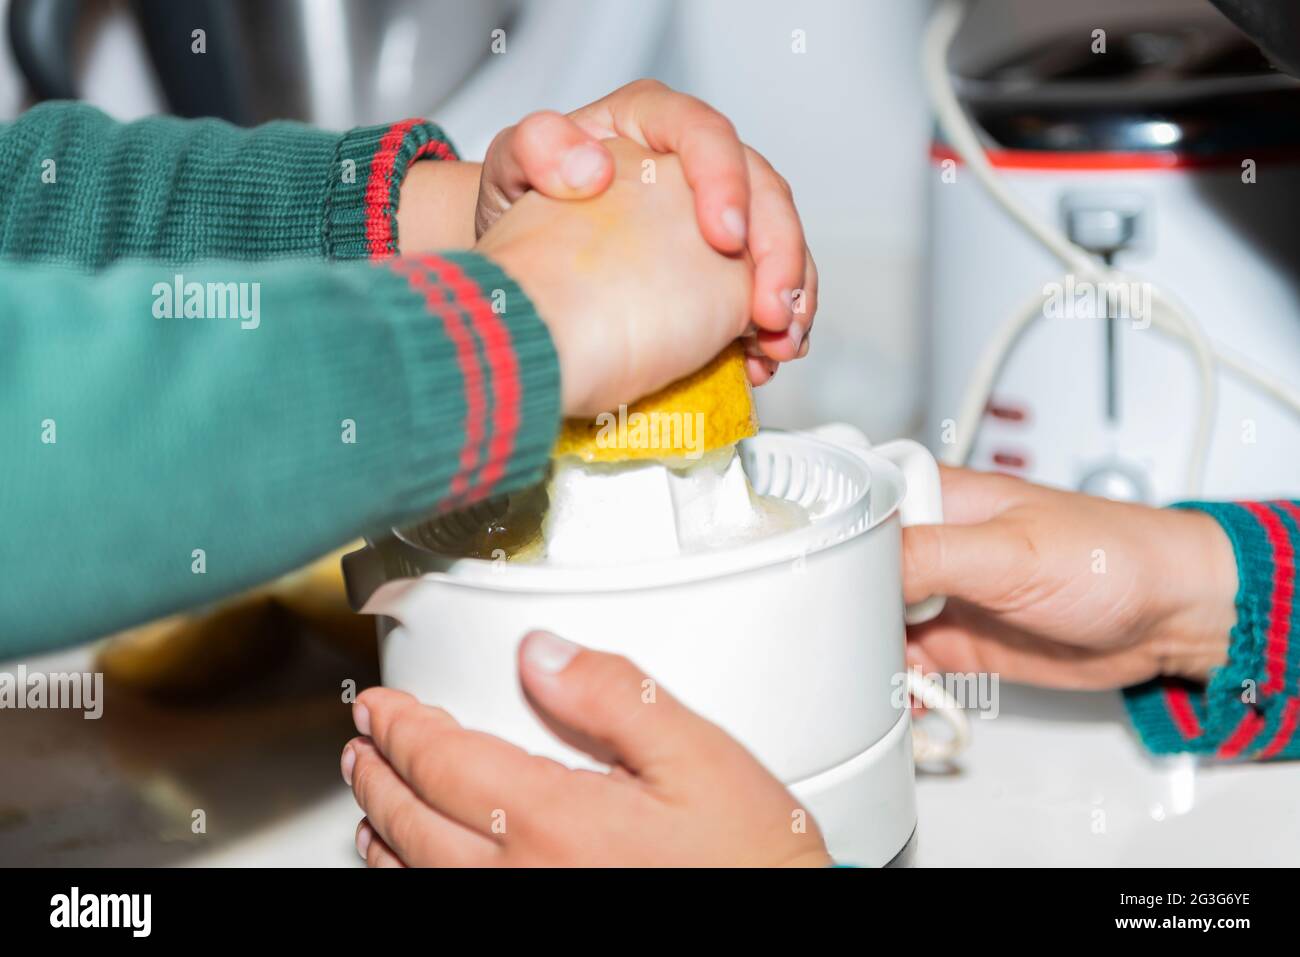 kid working together indoor kitchen enjoy juice whith machine squeezed Stock Photo